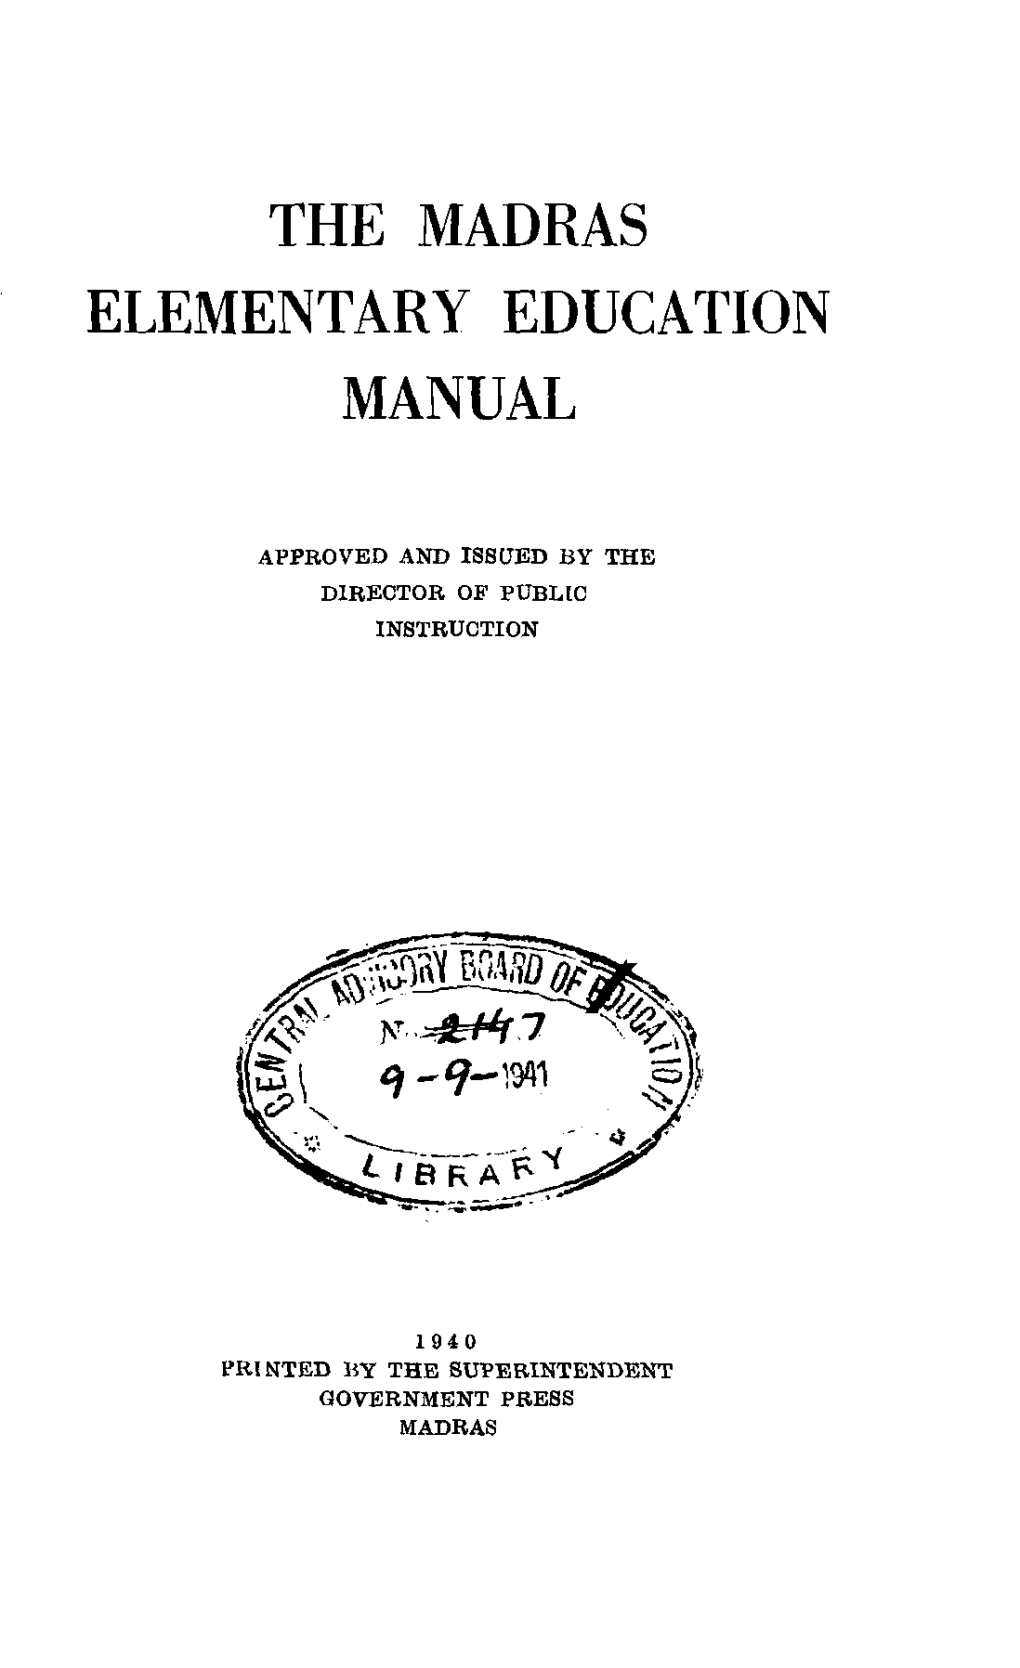 The Madras Elementary Education Manual